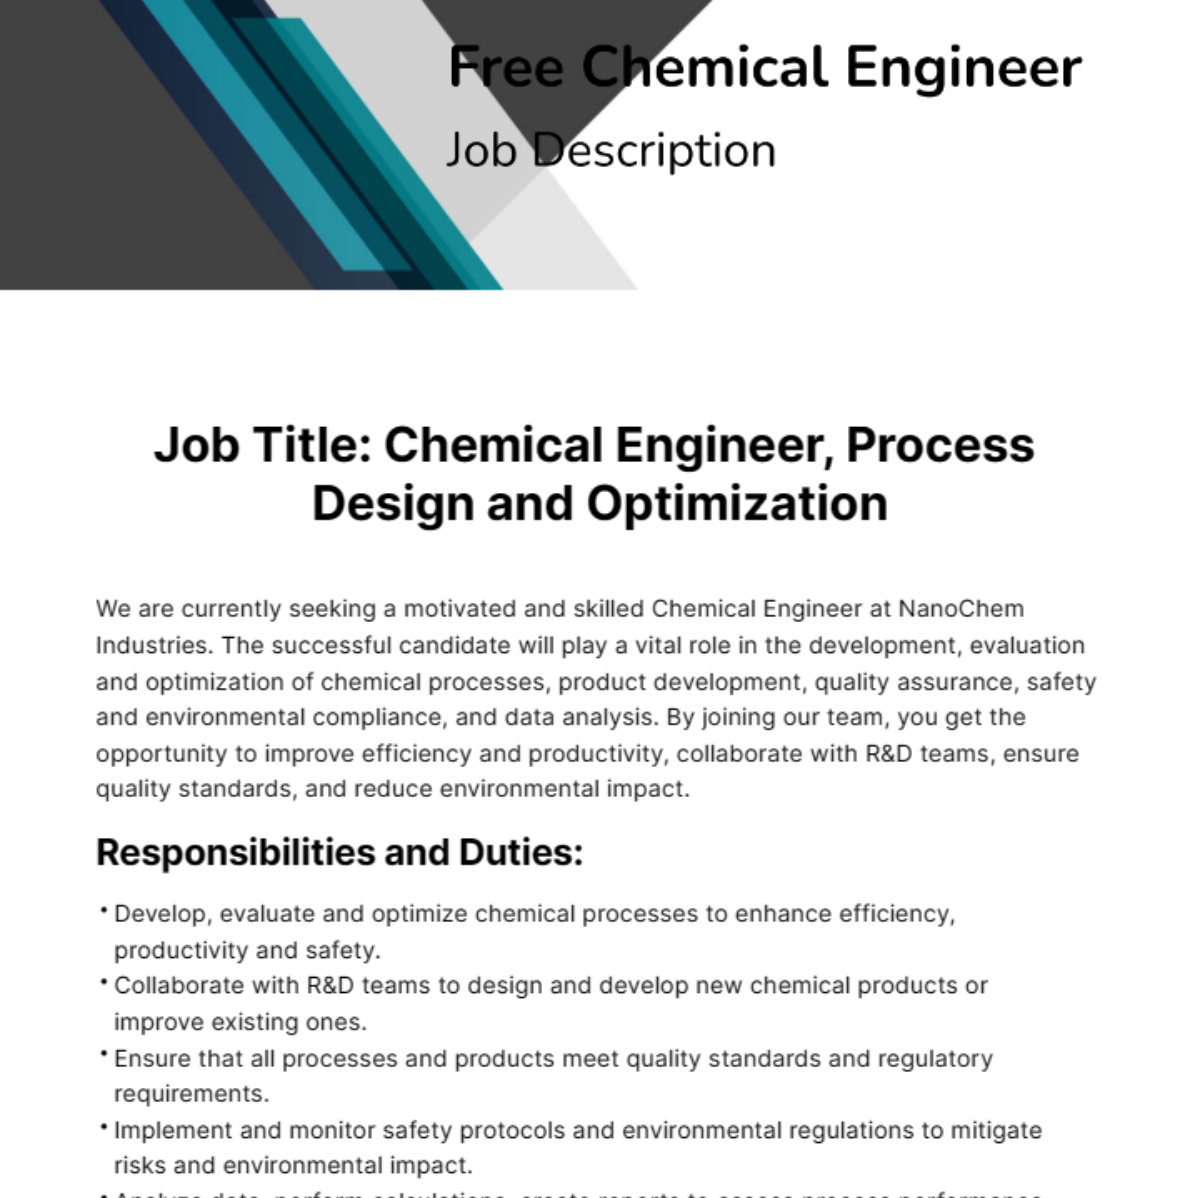 Free Chemical Engineer Job Description Template